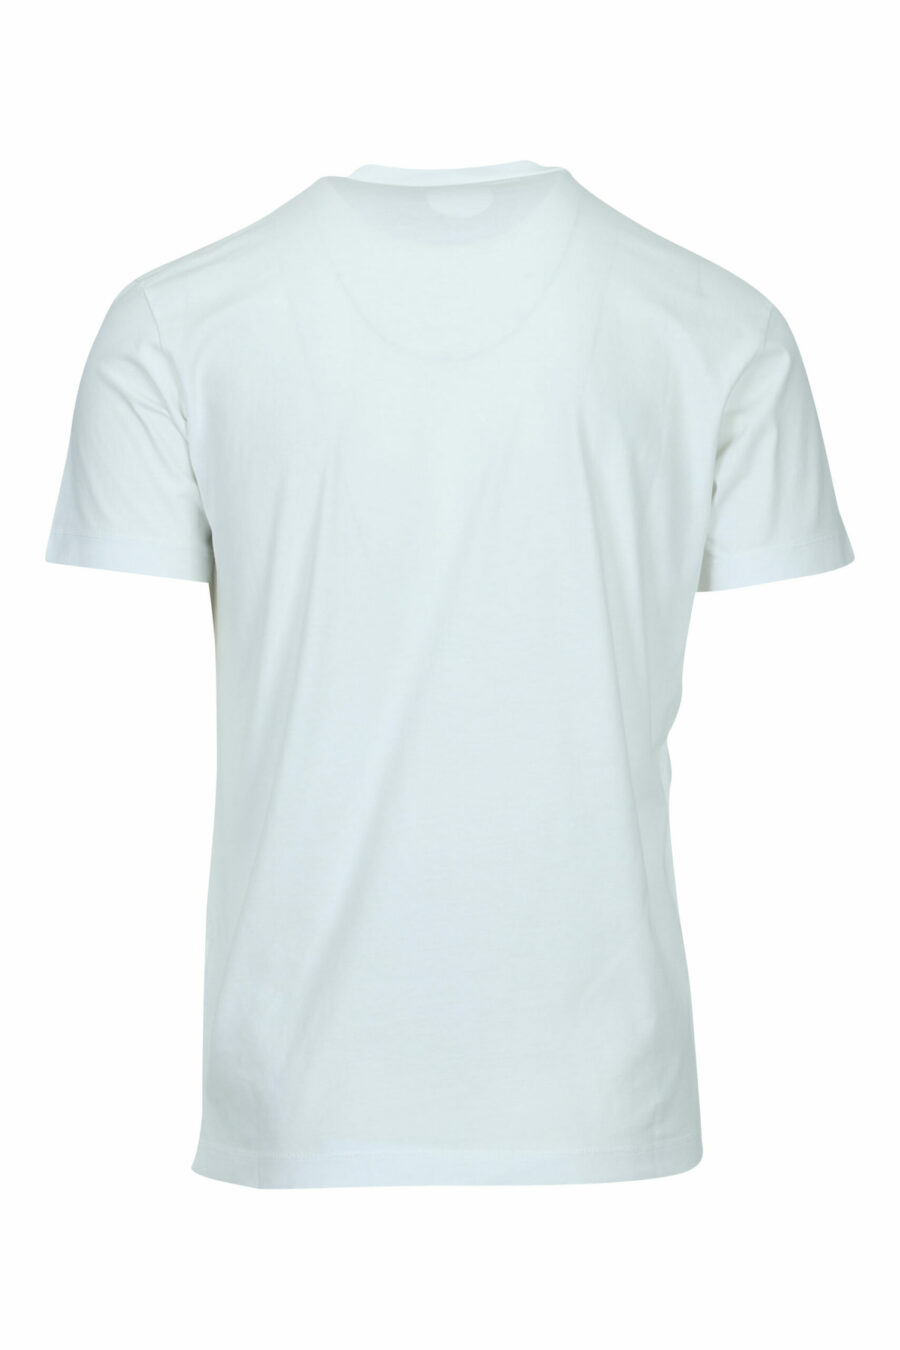 Camiseta blanca con logo doblado "milano" - 8054148570989 1 scaled